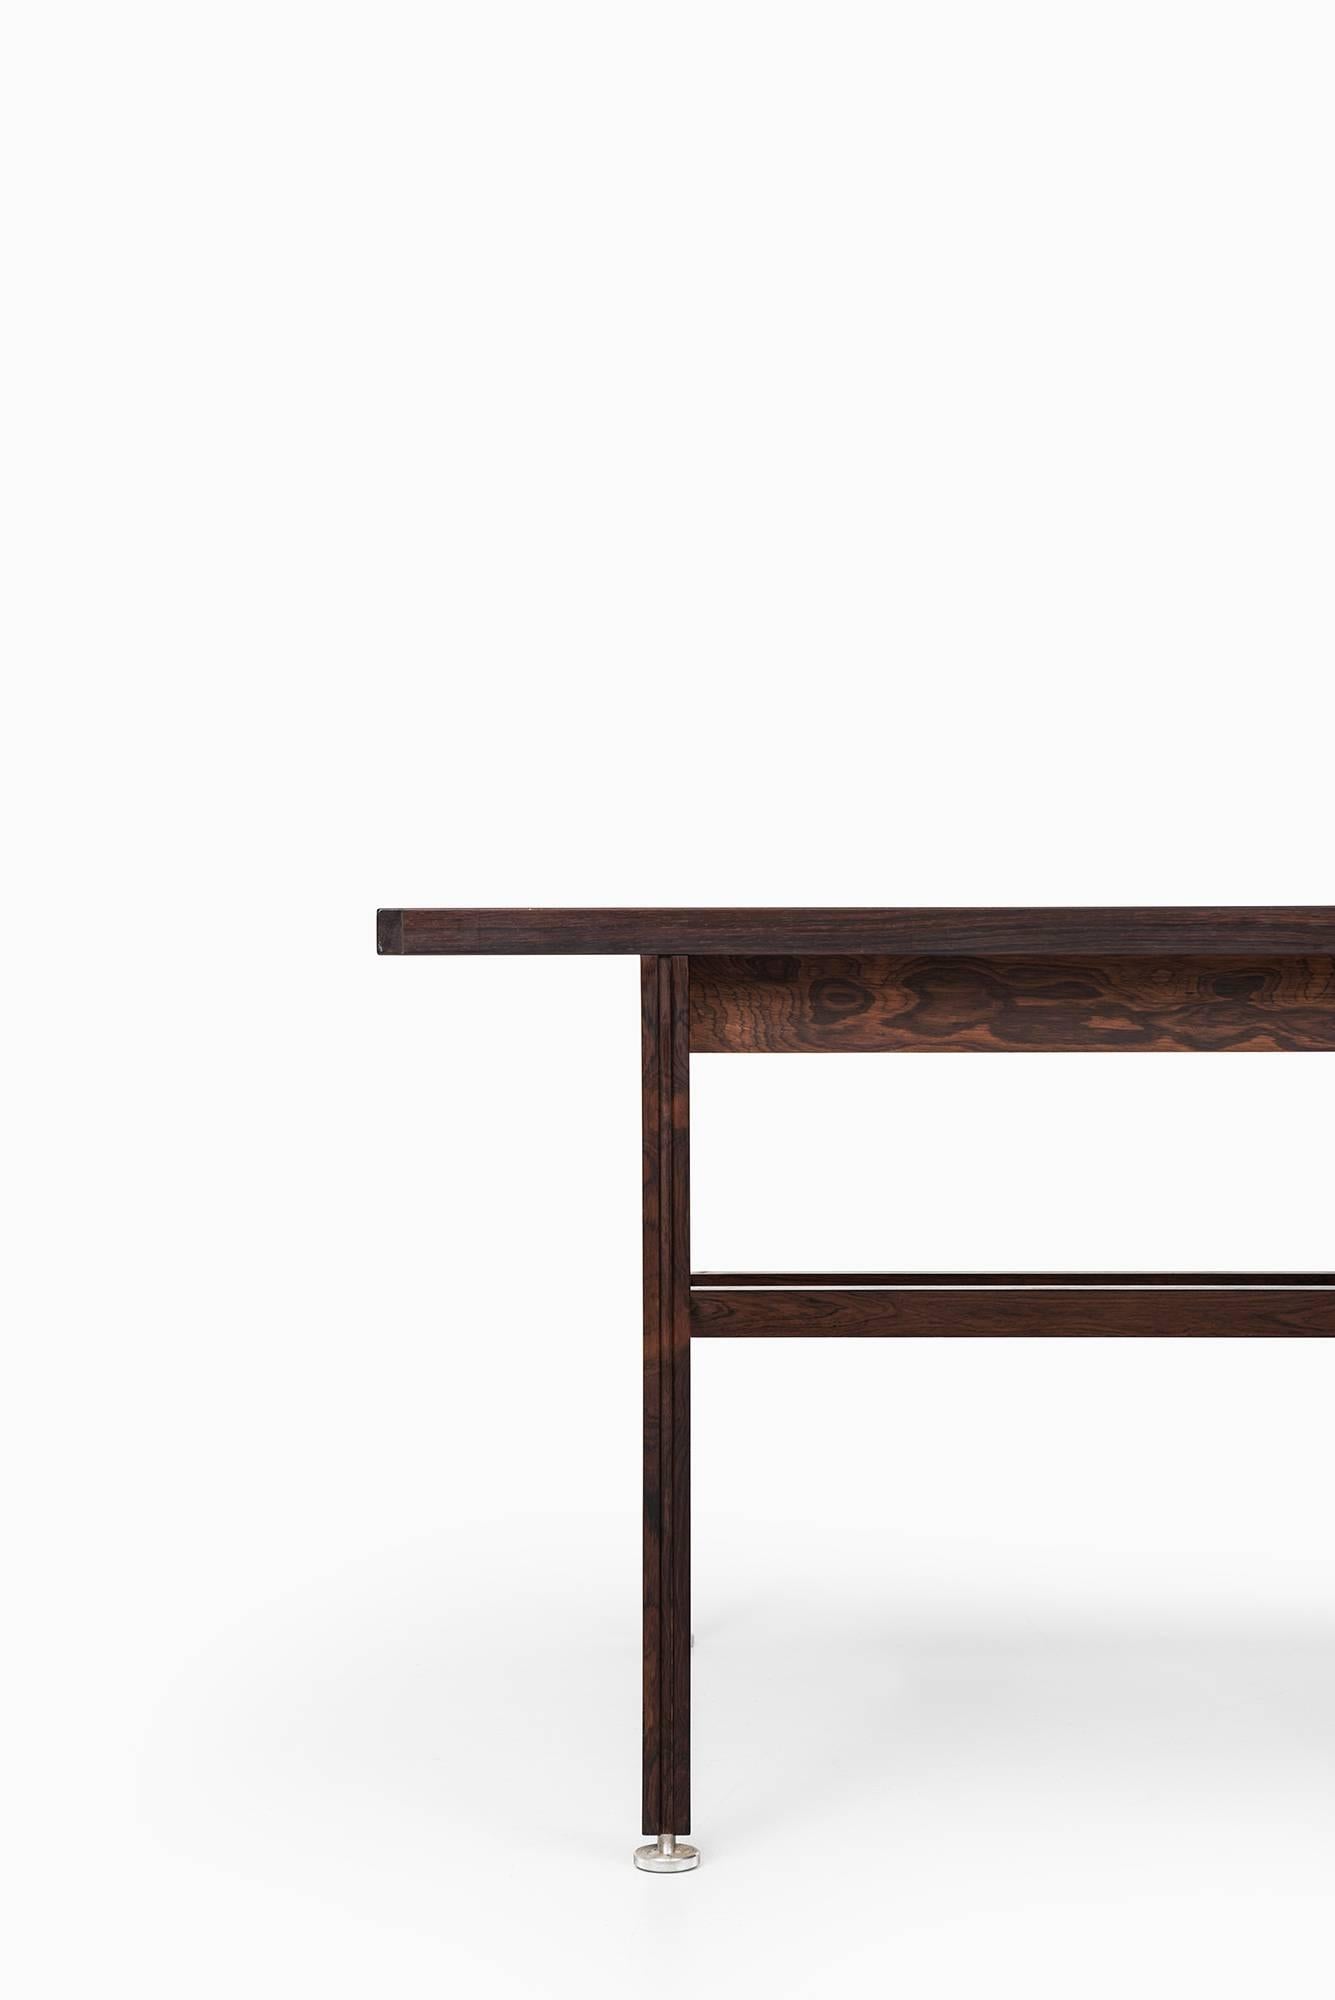 Rare dining table / desk model 96 designed by Jens Risom. Produced by Jens Risom Design in America.